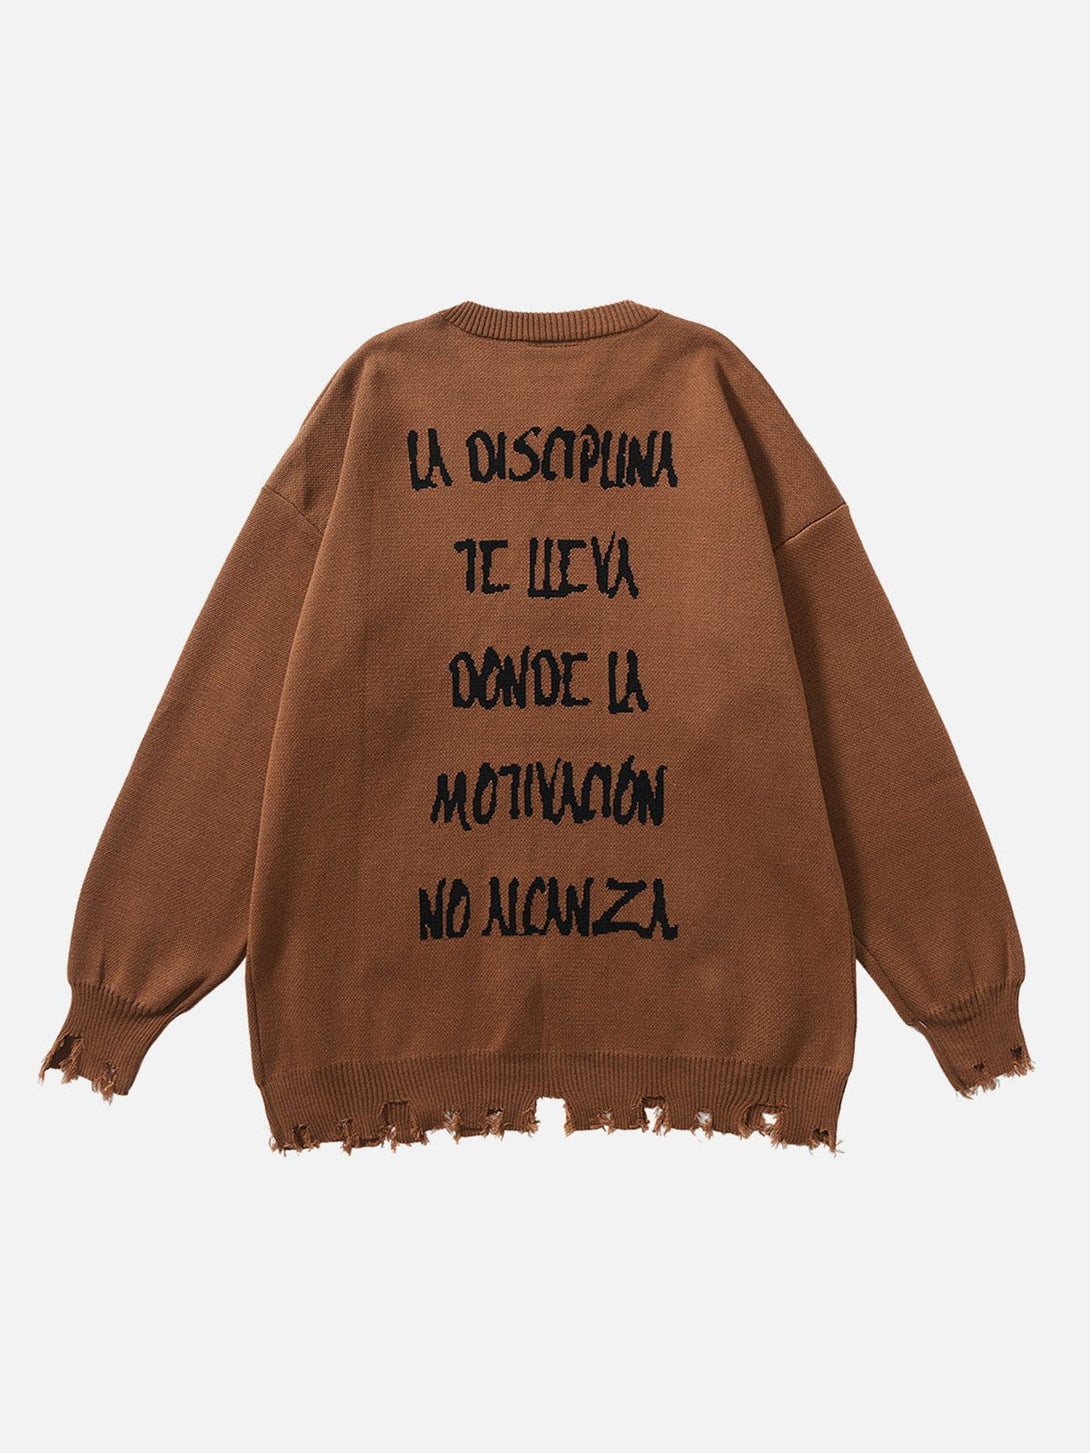 Majesda® - Butterfly Alphabet Print Sweater outfit ideas streetwear fashion